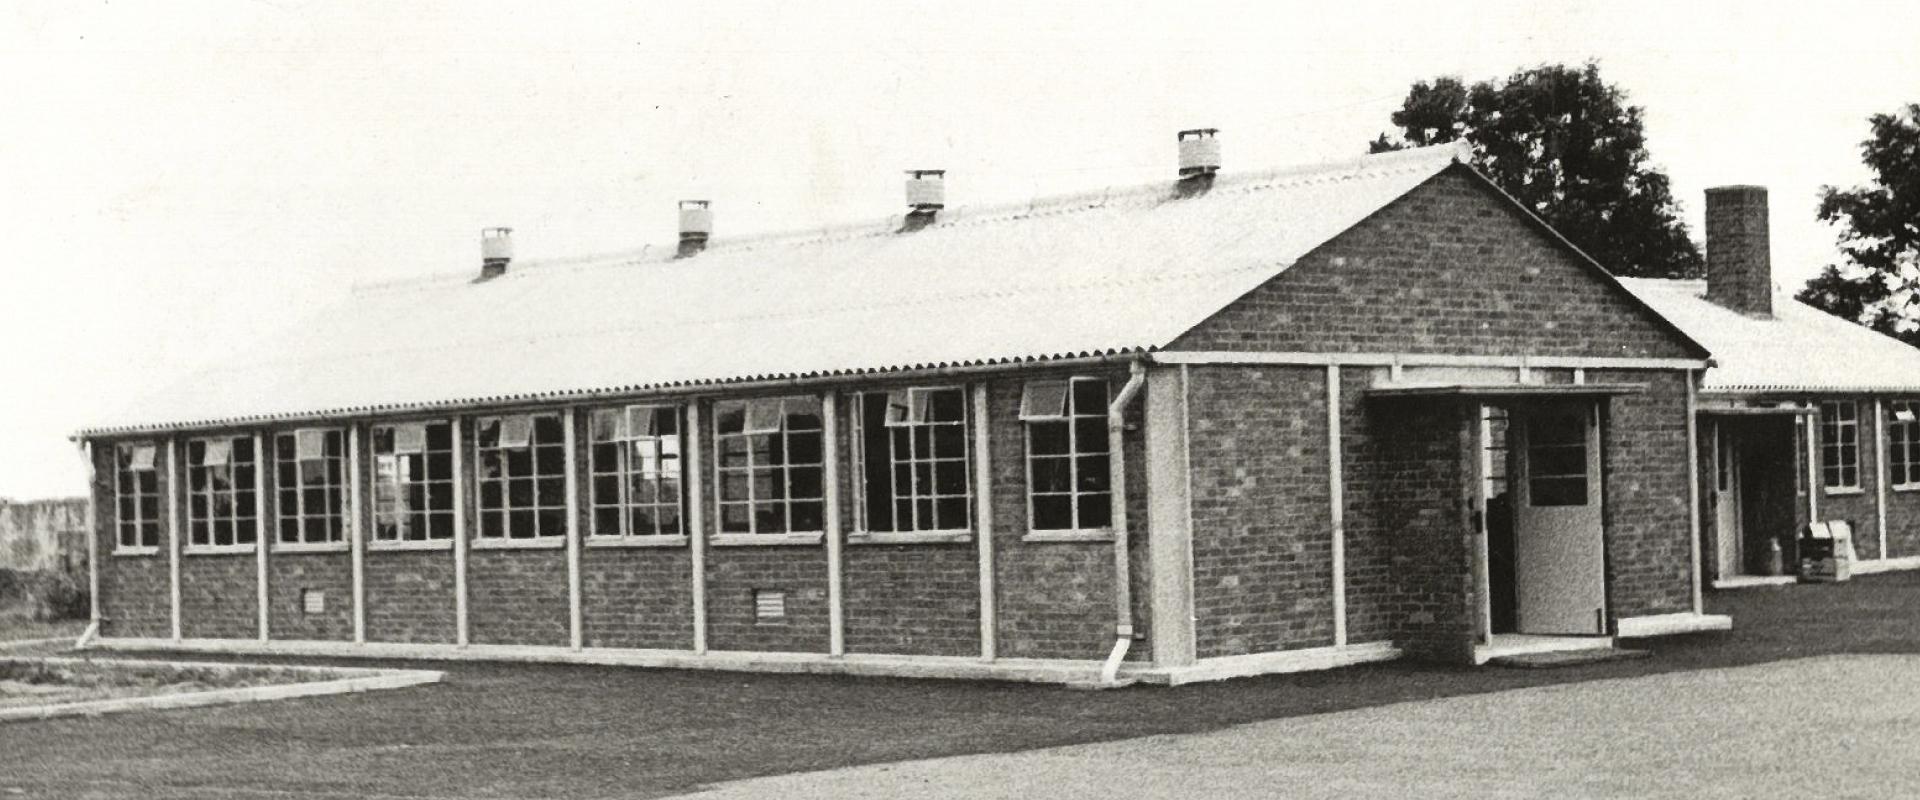 Thomas Mills High School History in 1940s